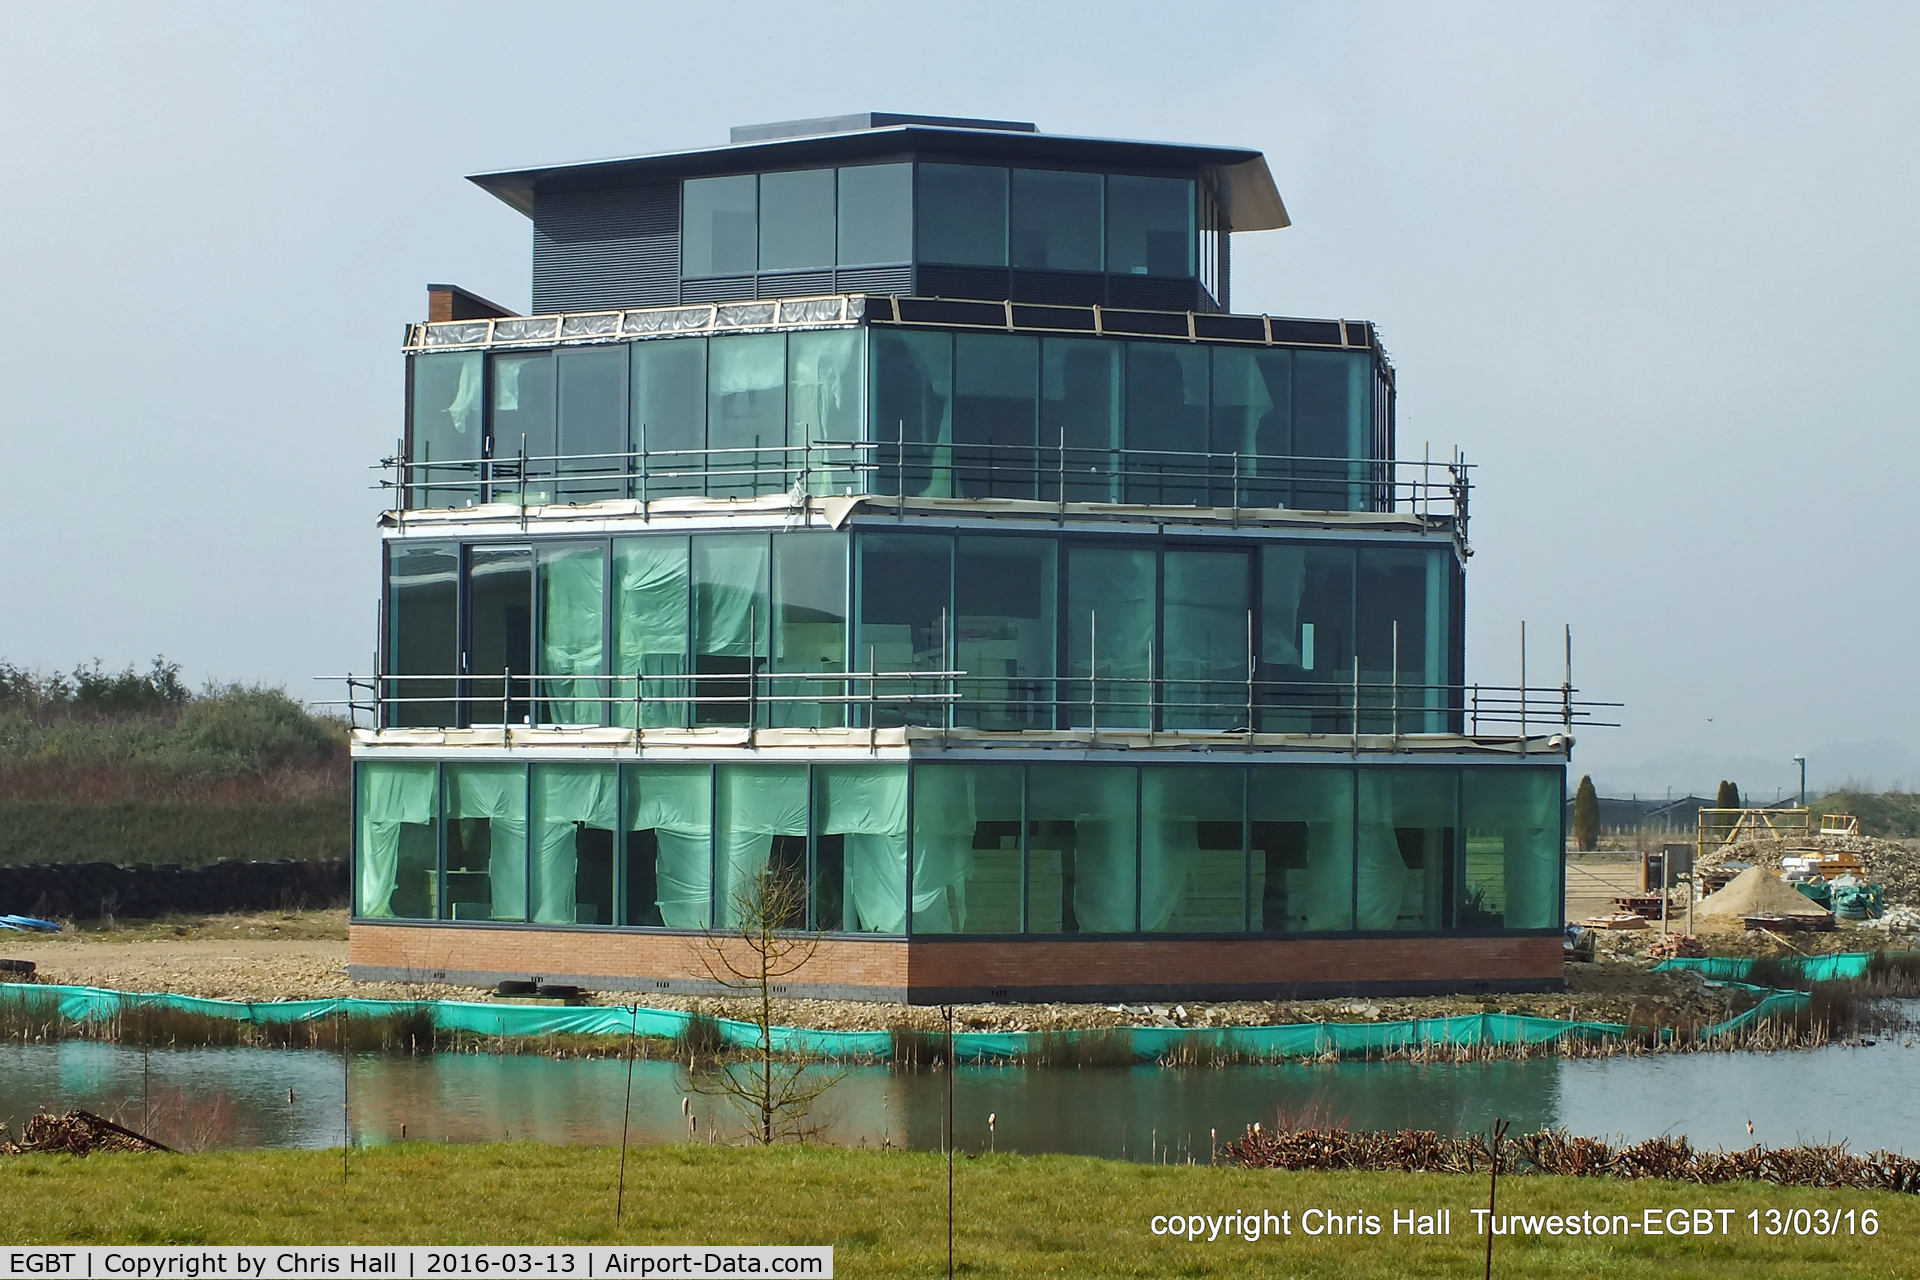 Turweston Aerodrome Airport, Turweston, England United Kingdom (EGBT) - Turwestons new tower, cafe and club house 